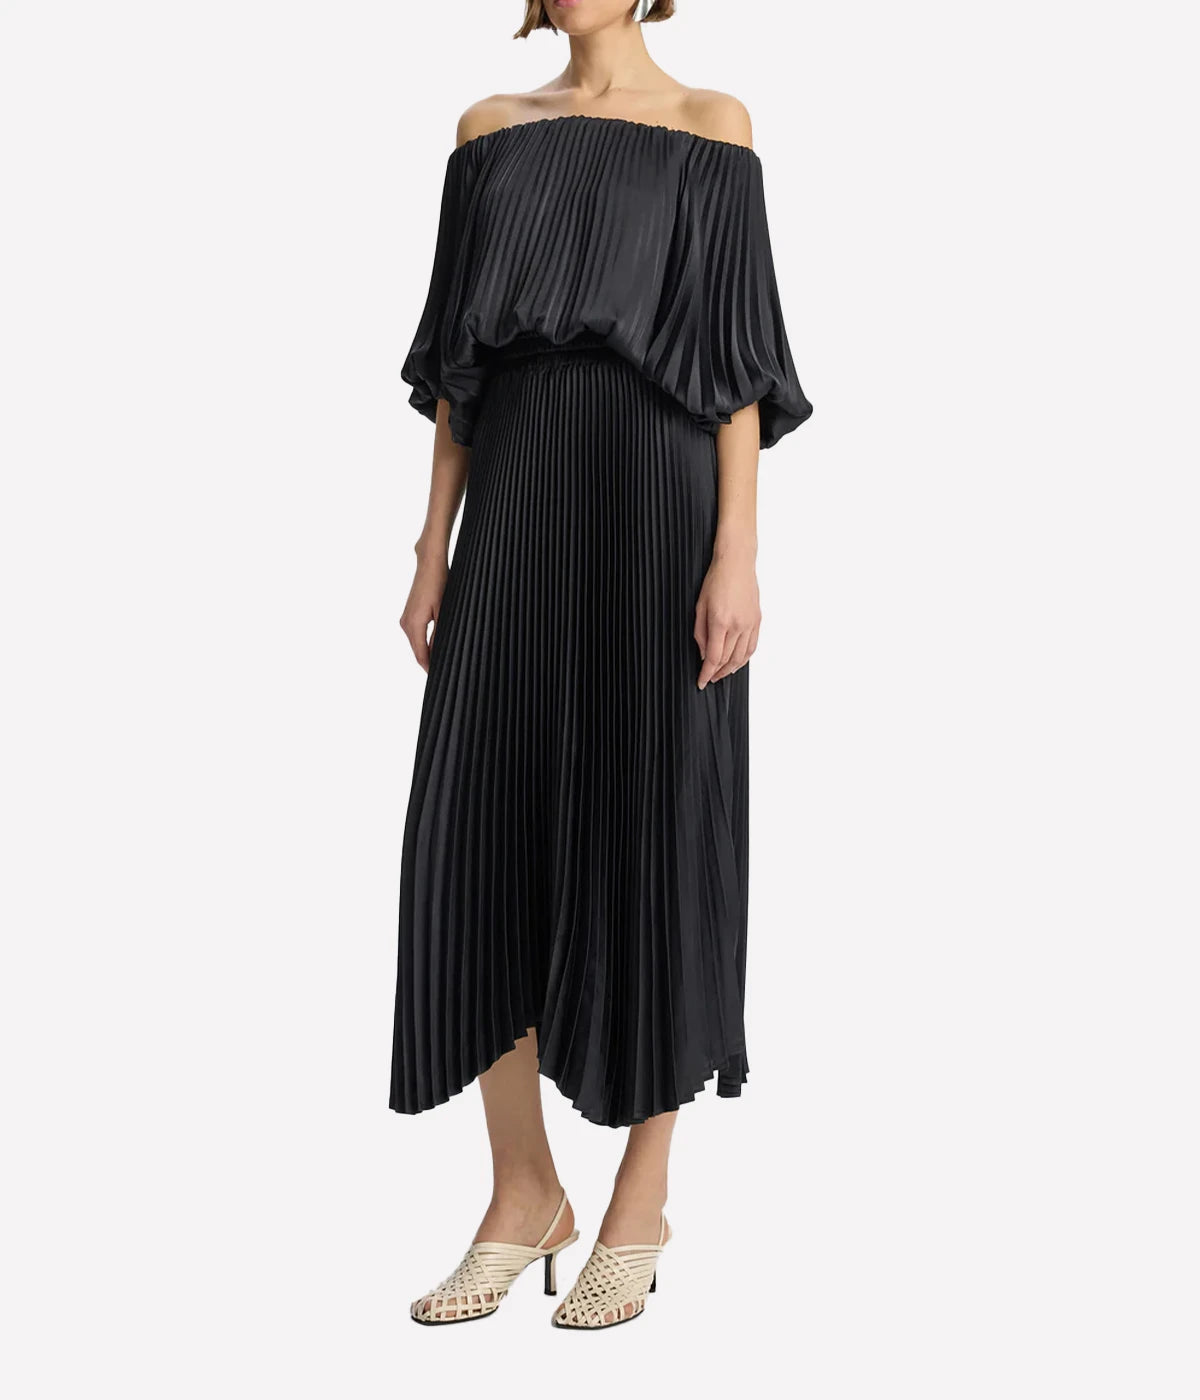 Sienna Dress in Black